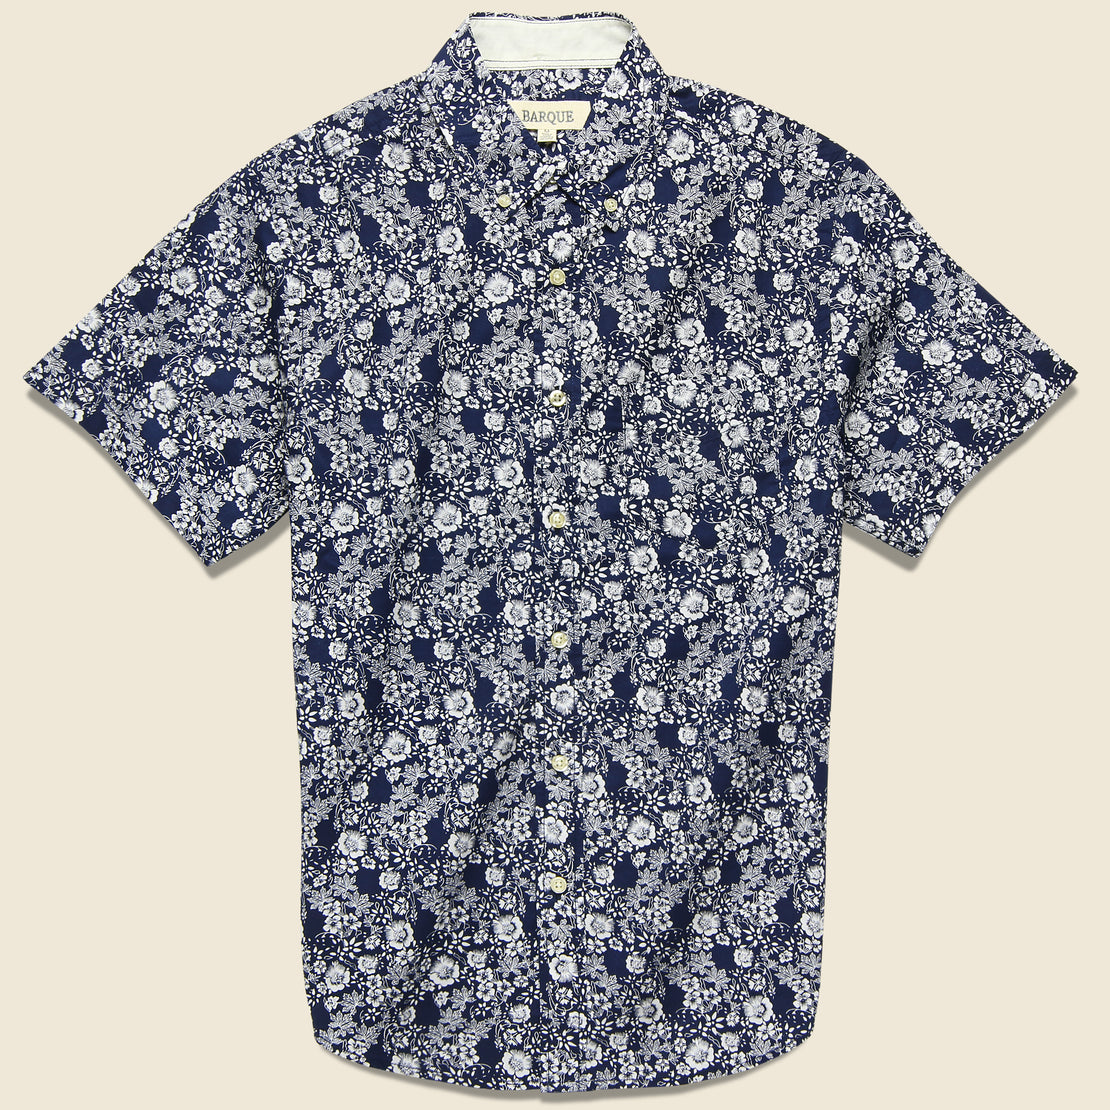 Barque Floral Print Shirt - Navy